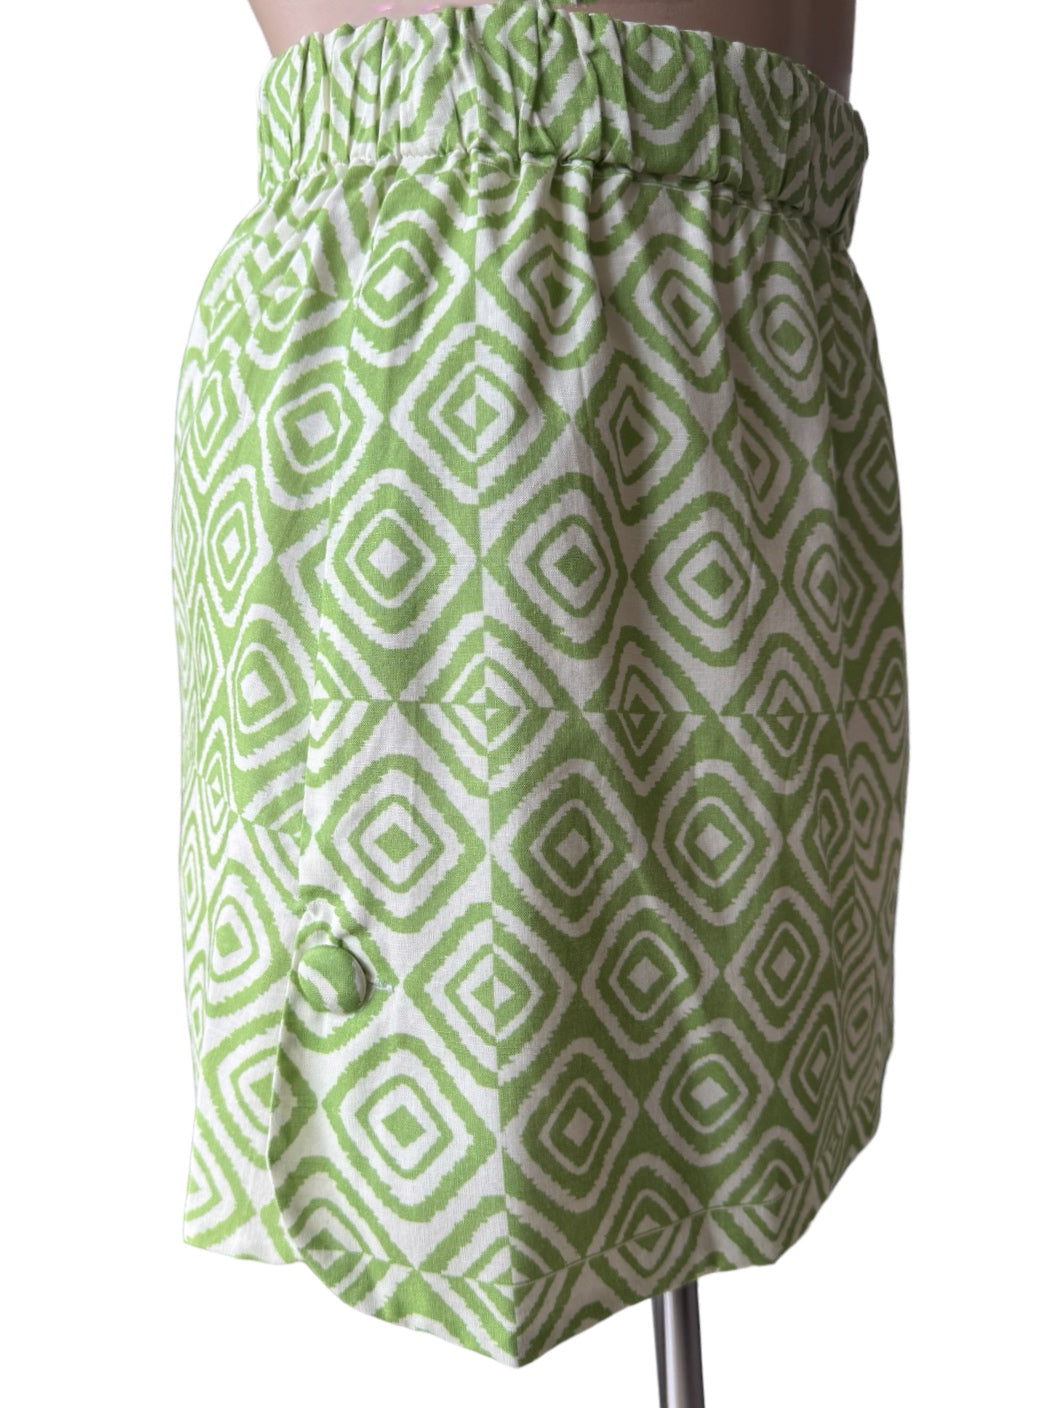 Green aztec print Skirt